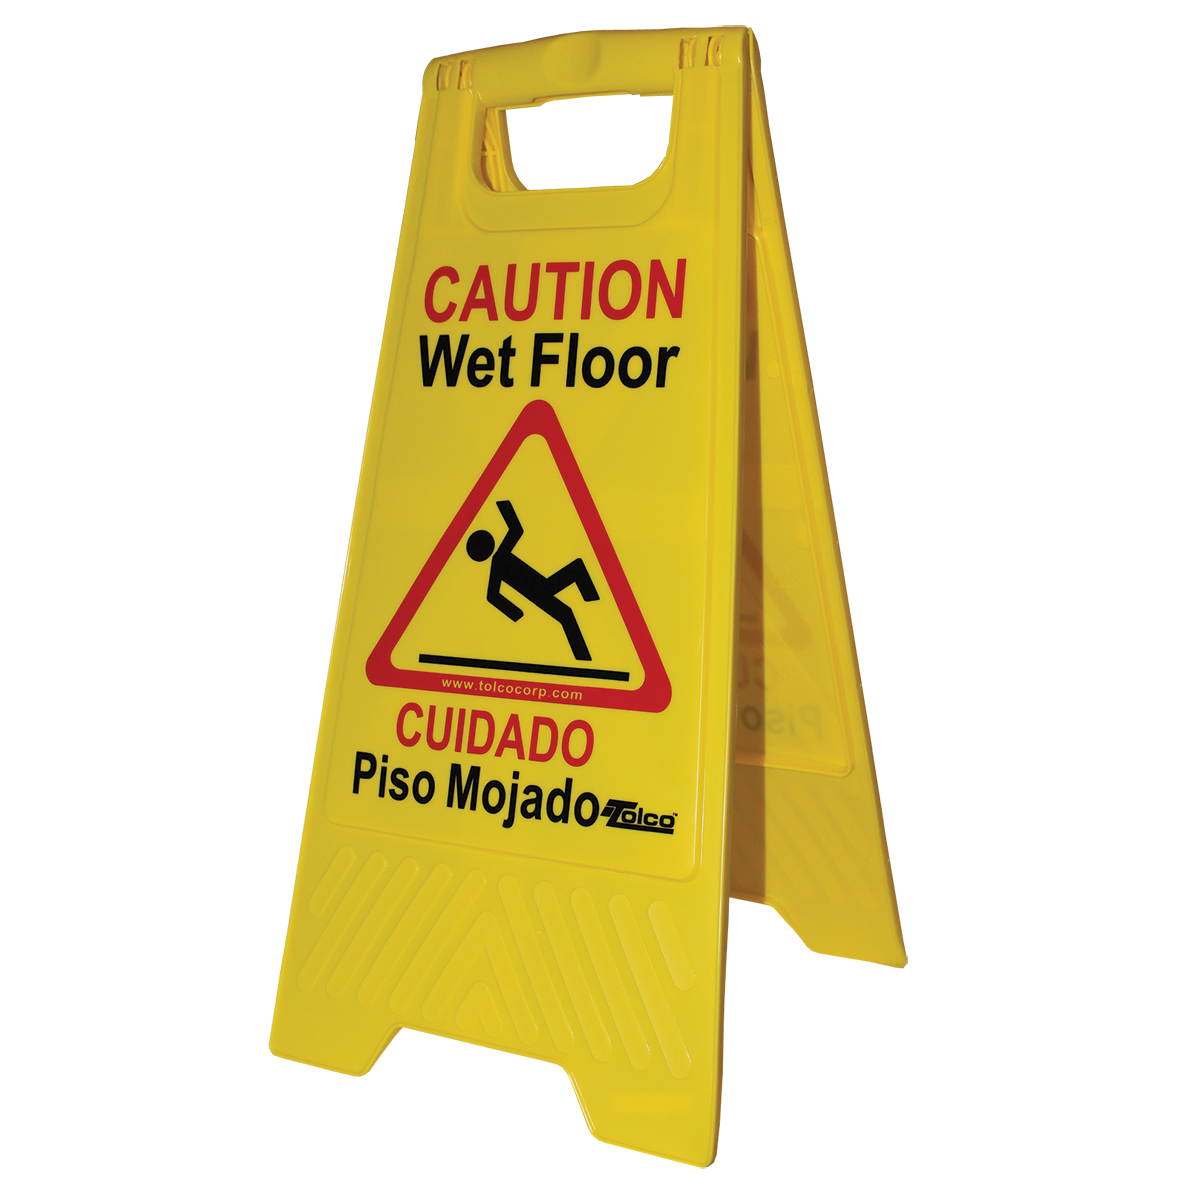 Wet Floor Caution Vertical Sign or Sticker #19 